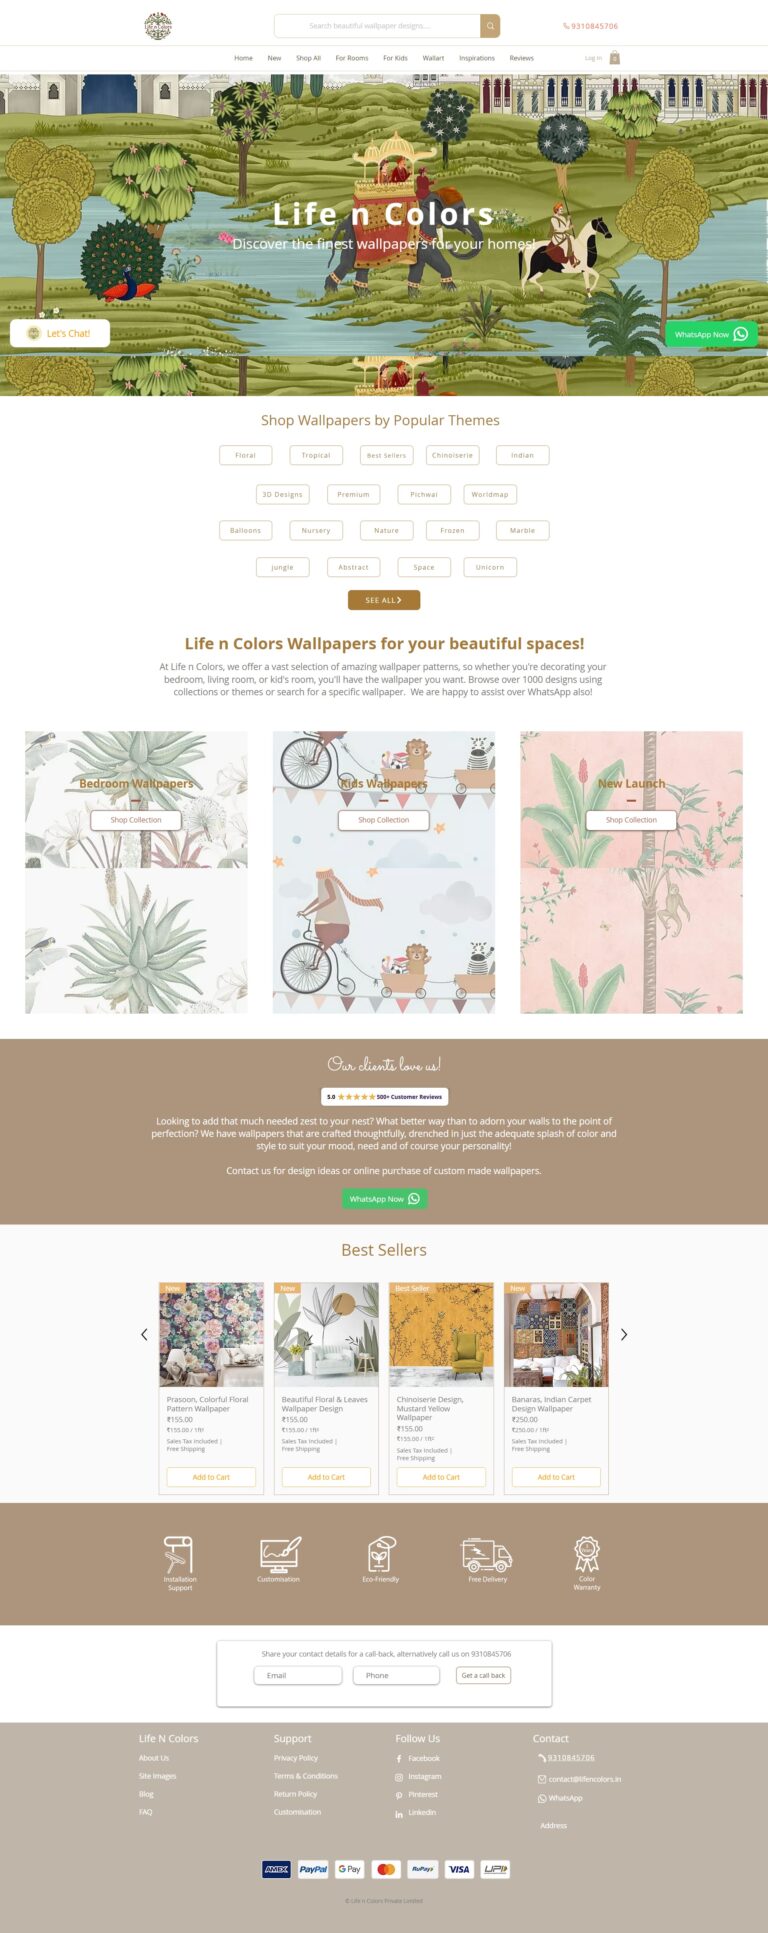 Wallpaper Ecommerce Wix Site Design | Yudha Global